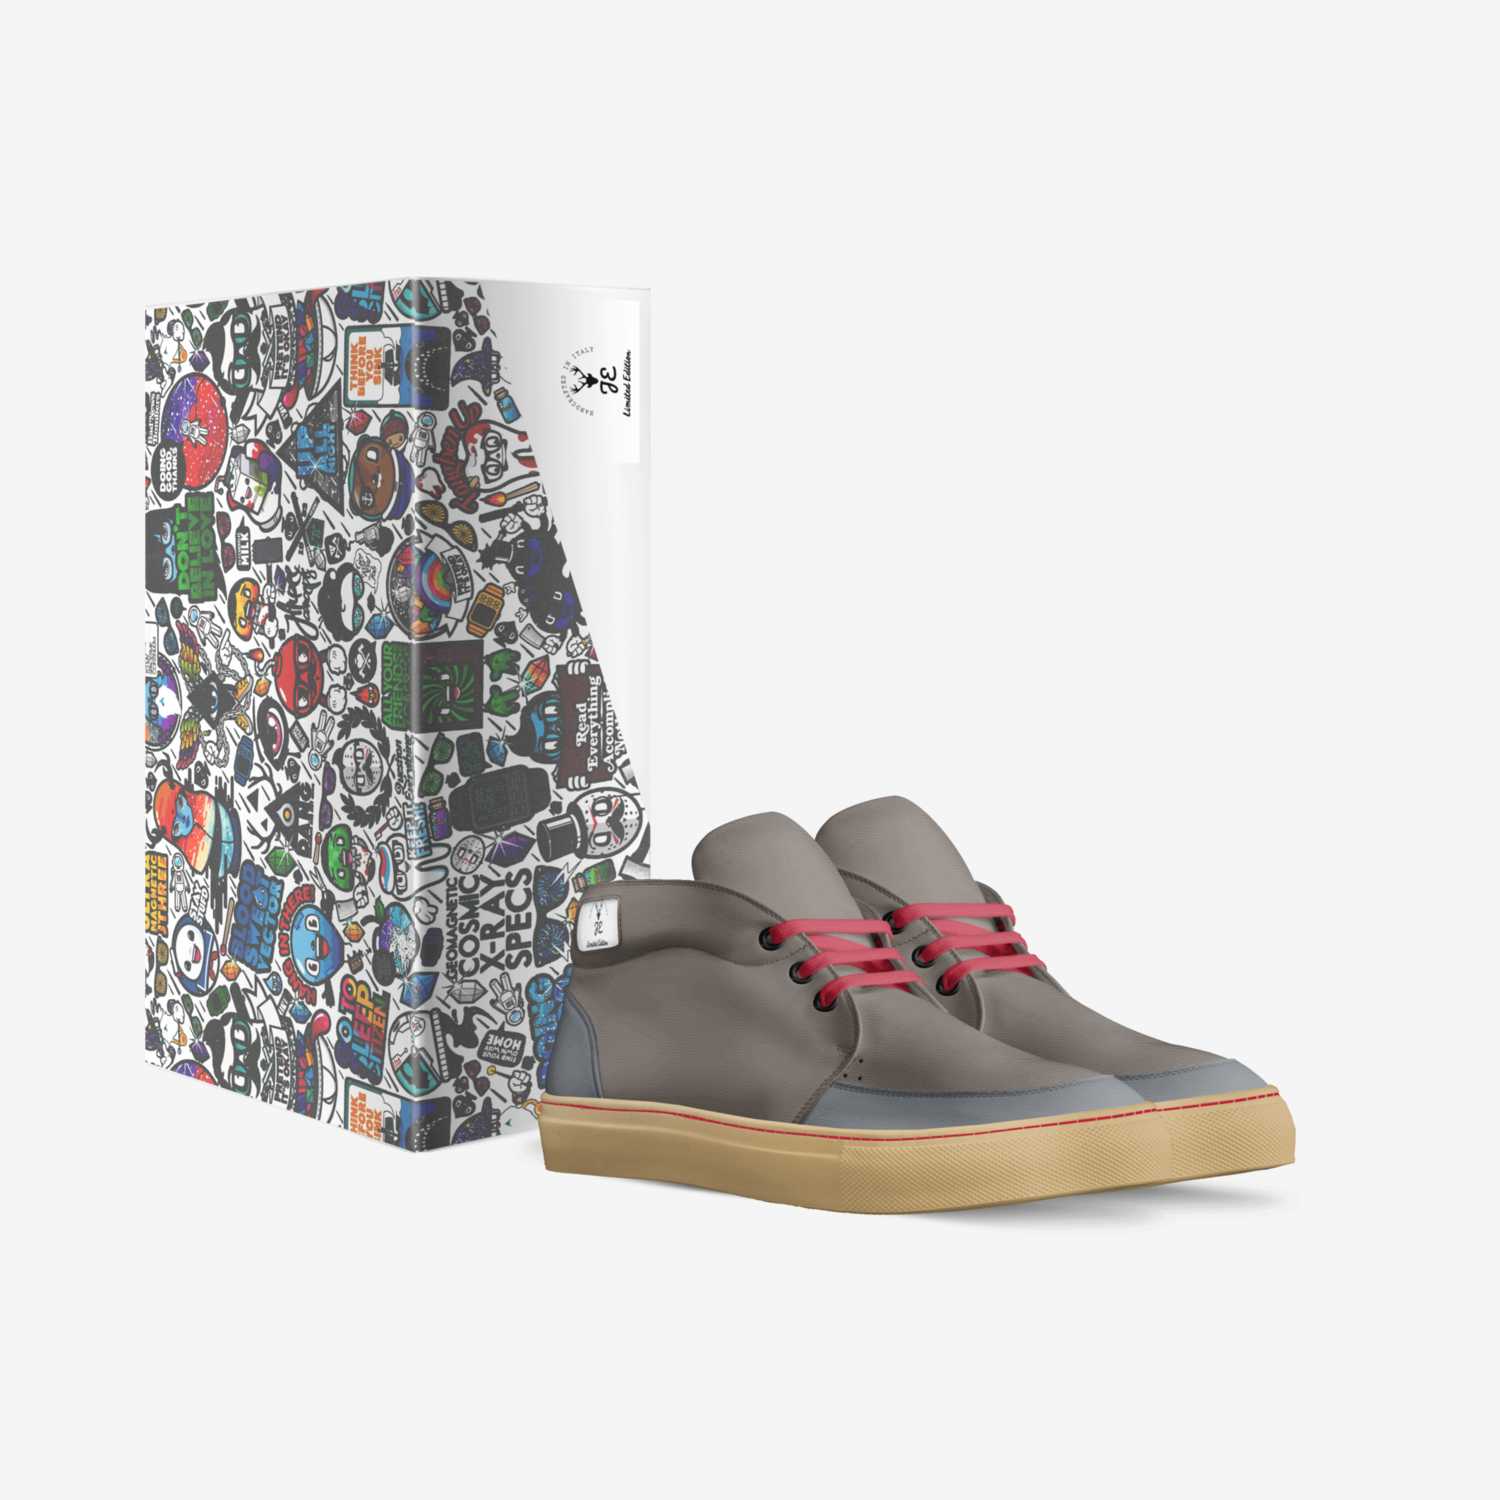 JE custom made in Italy shoes by Joao Esturrado | Box view